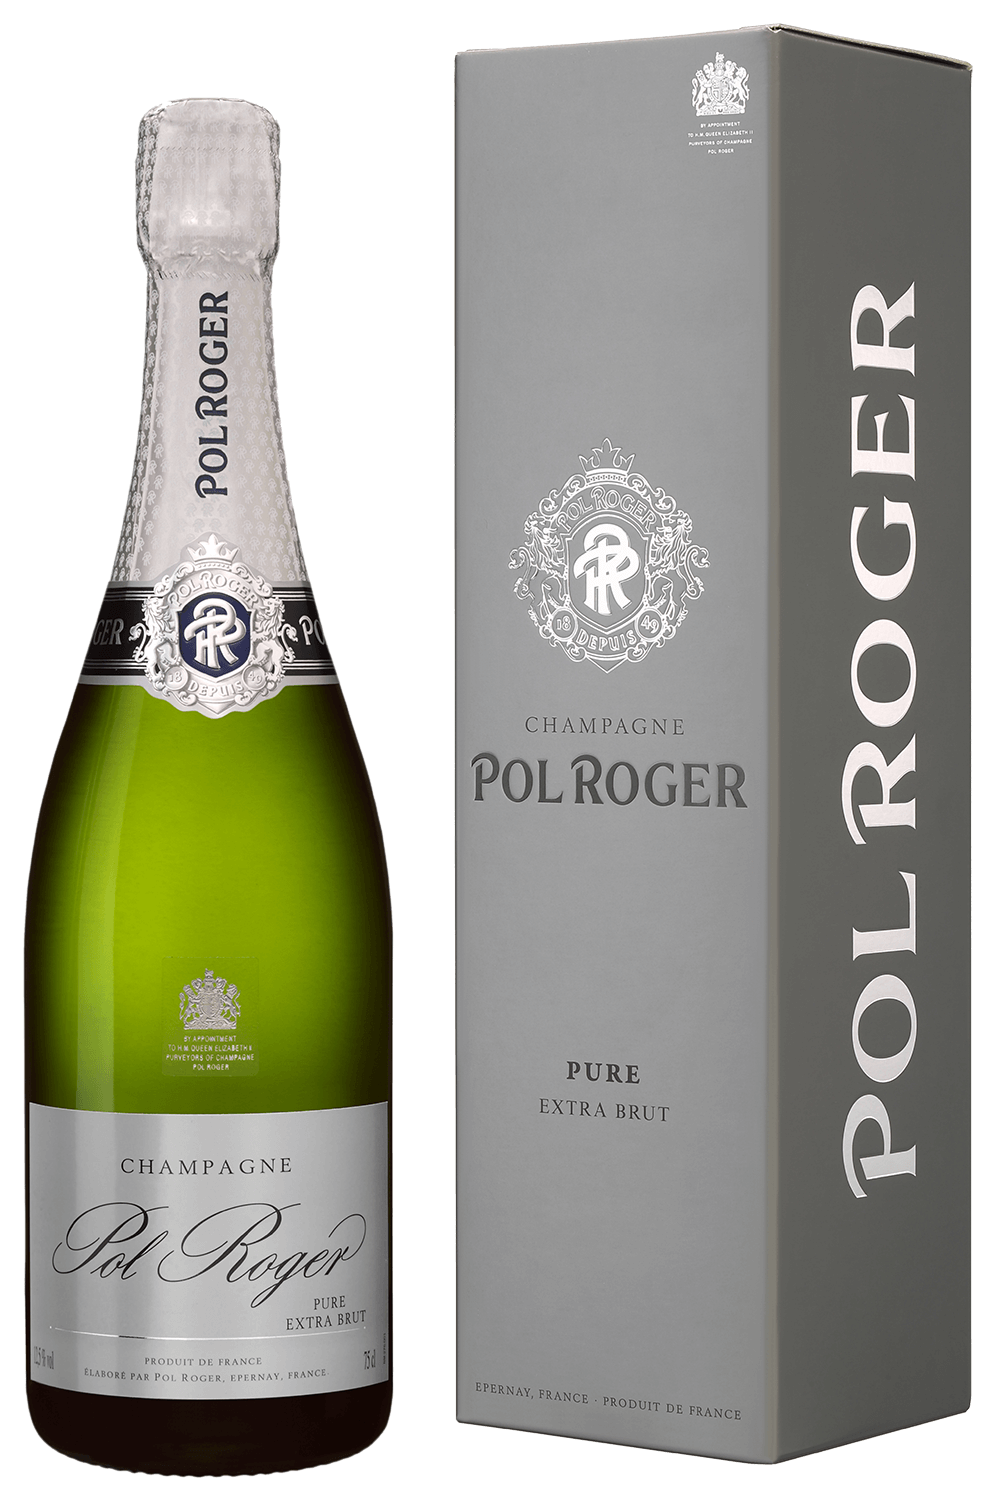 bollinger r d extra brut champagne aoc gift box Pol Roger Pure Extra Brut Champagne AOC (gift box)